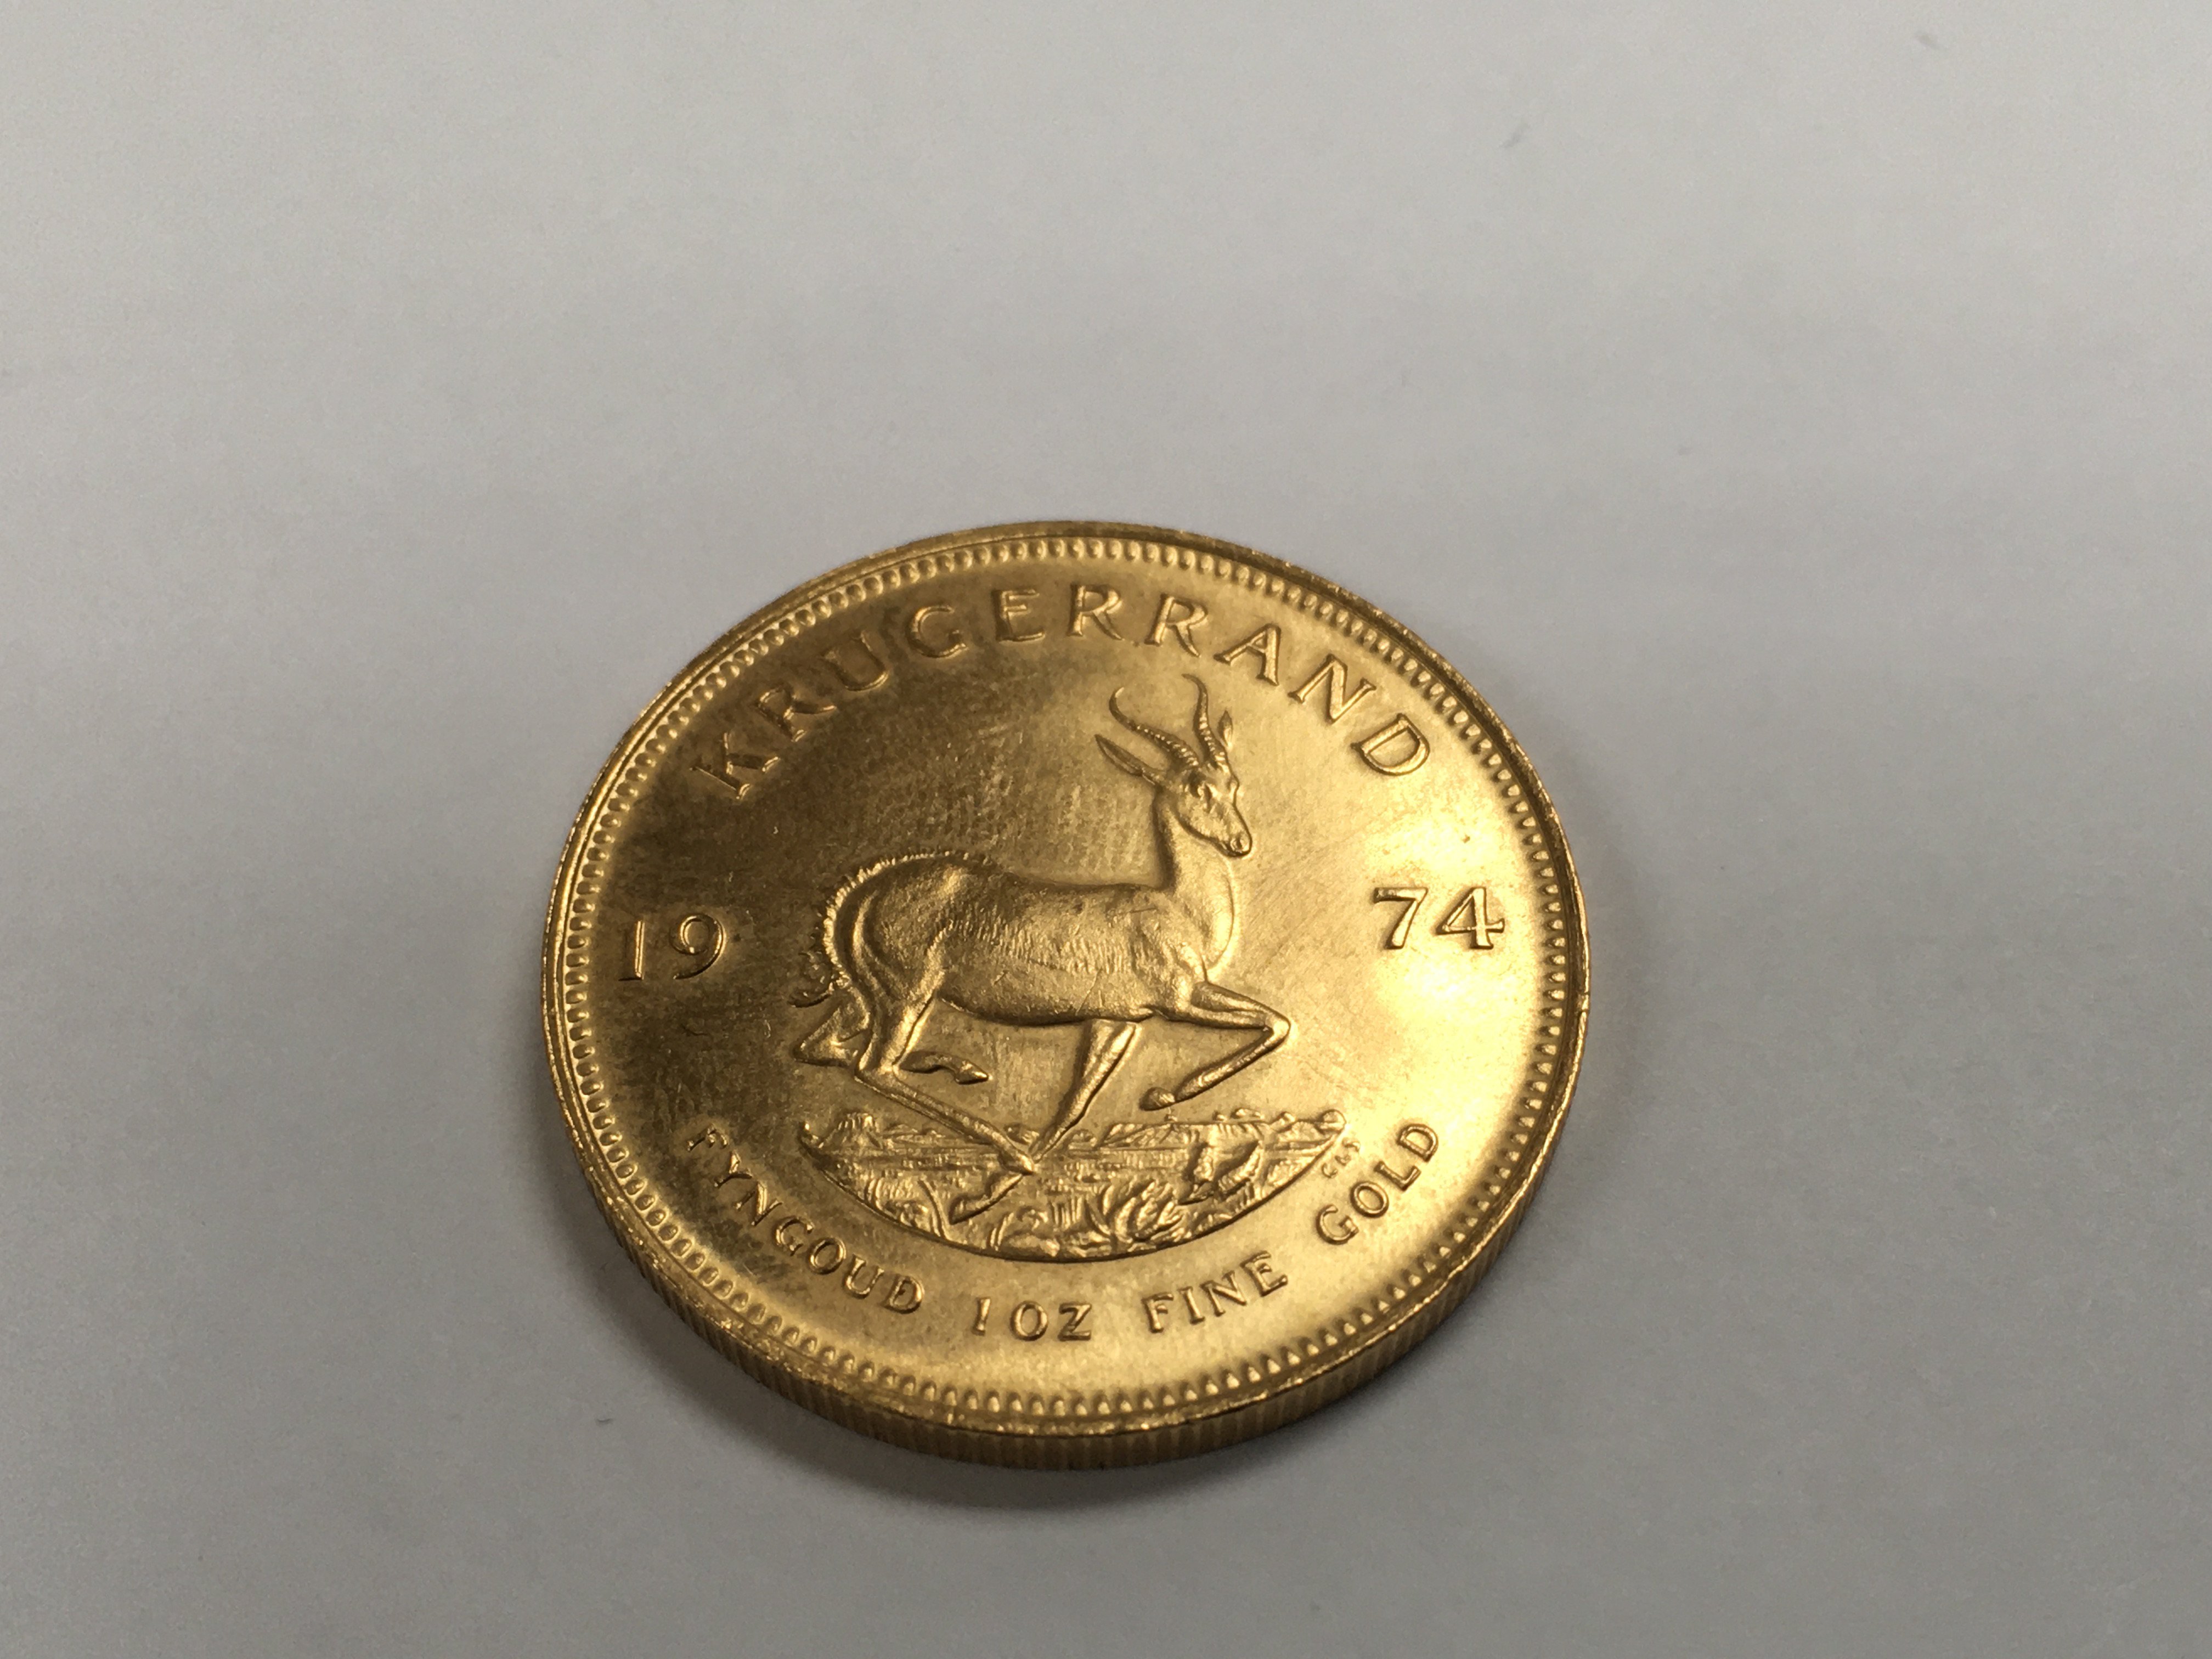 A 1974 1 oz gold krugerrand.